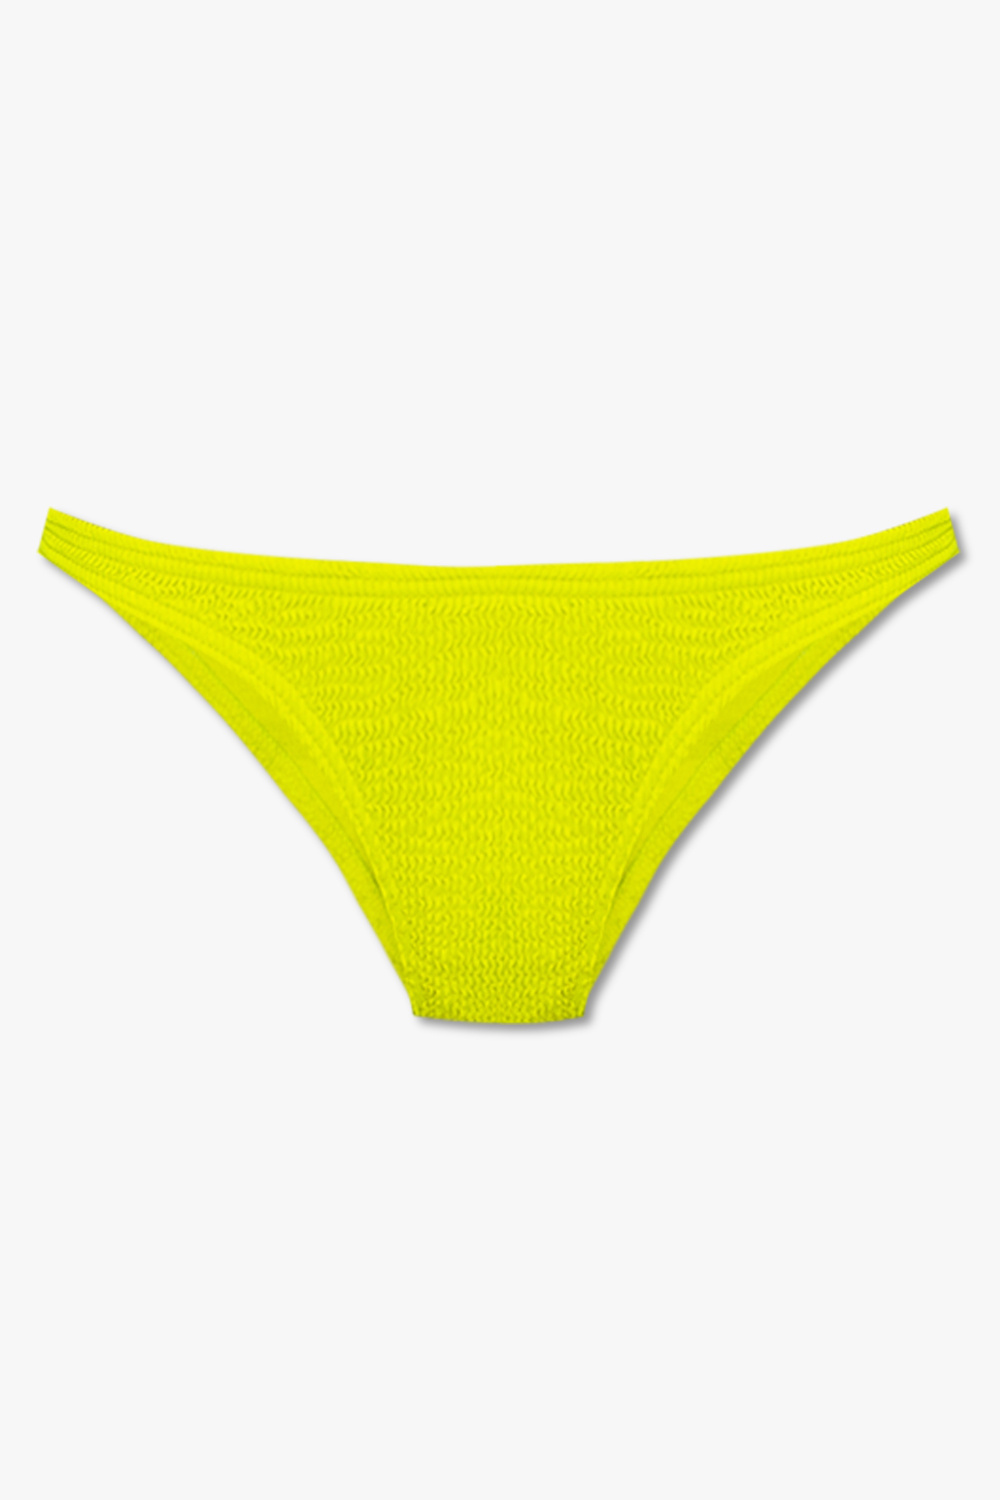 Bond-Eye ‘Vista’ swimsuit bottom